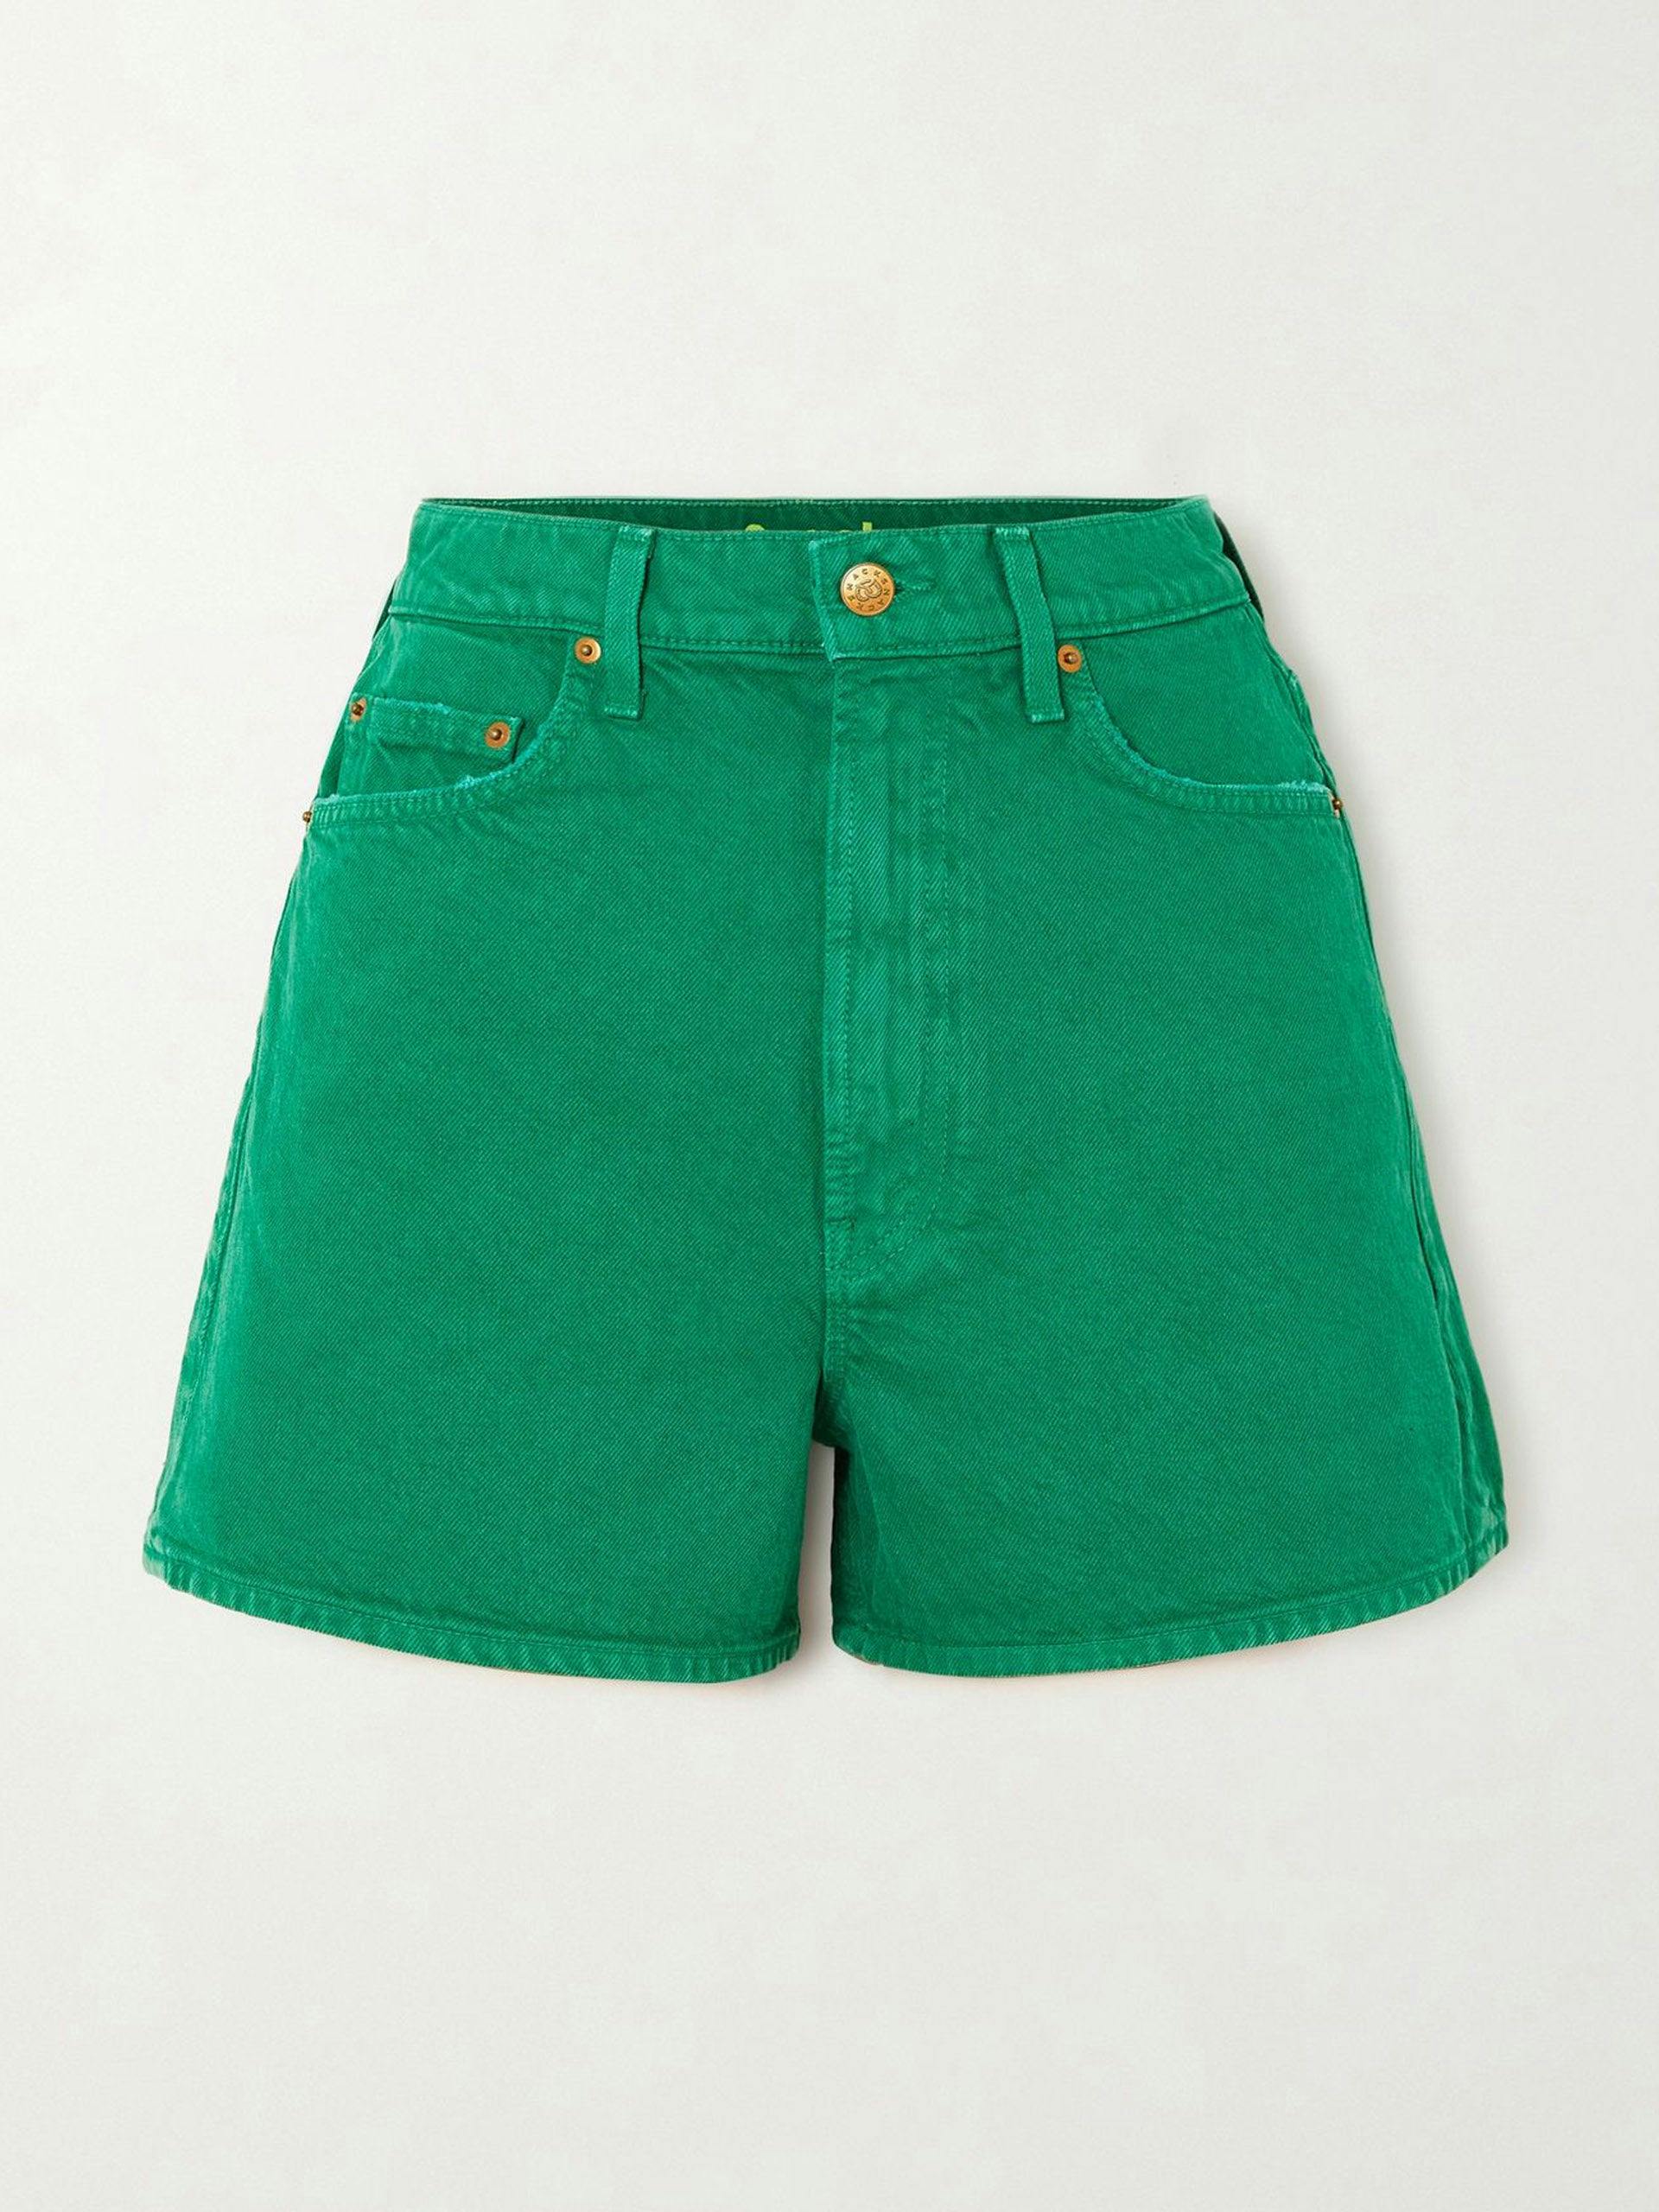 Green denim shorts